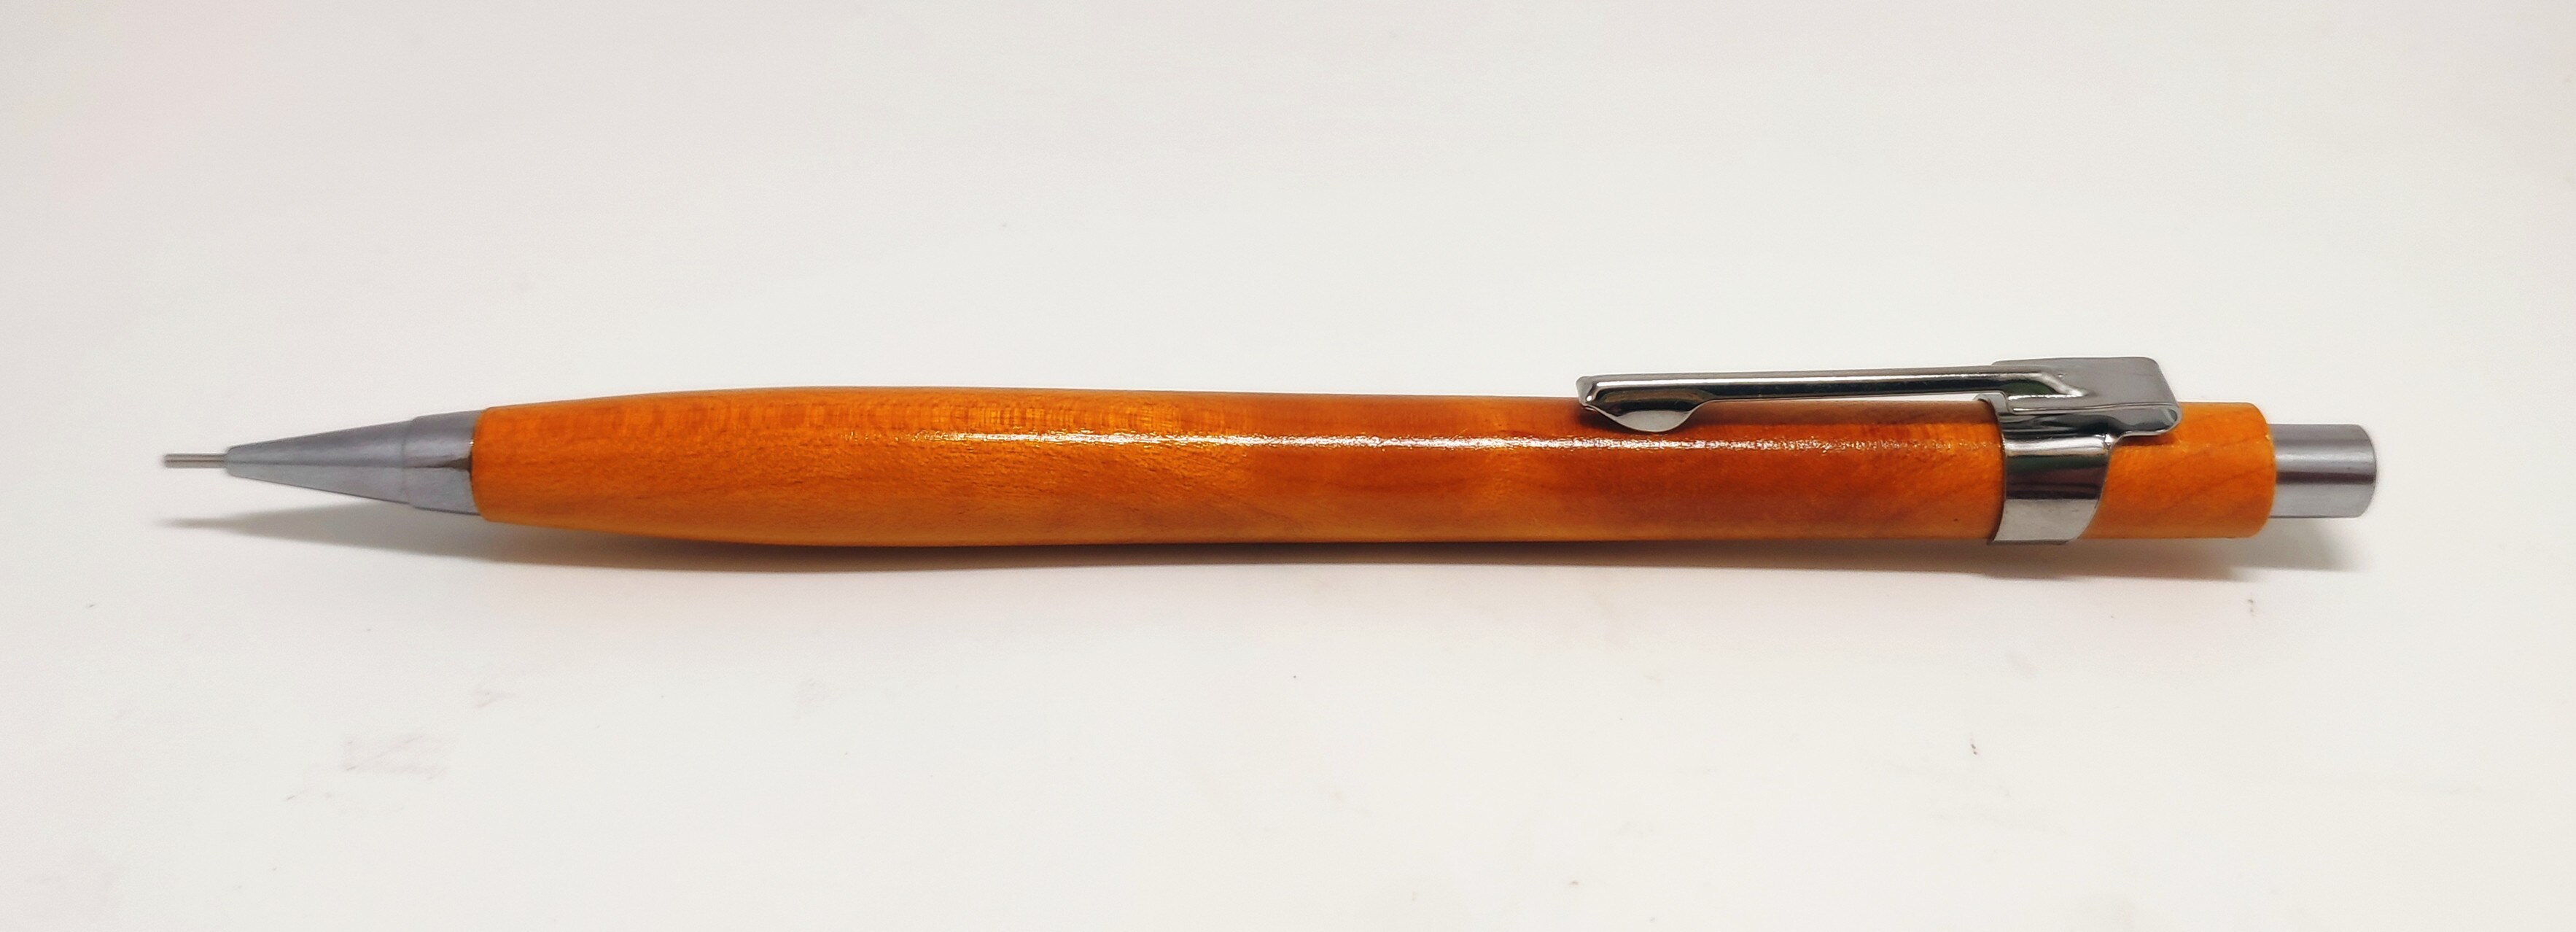 Saiyite fremdrivende blyant, træblyant, valnødblyant, rød pæreblyant ,0.5mm blyant